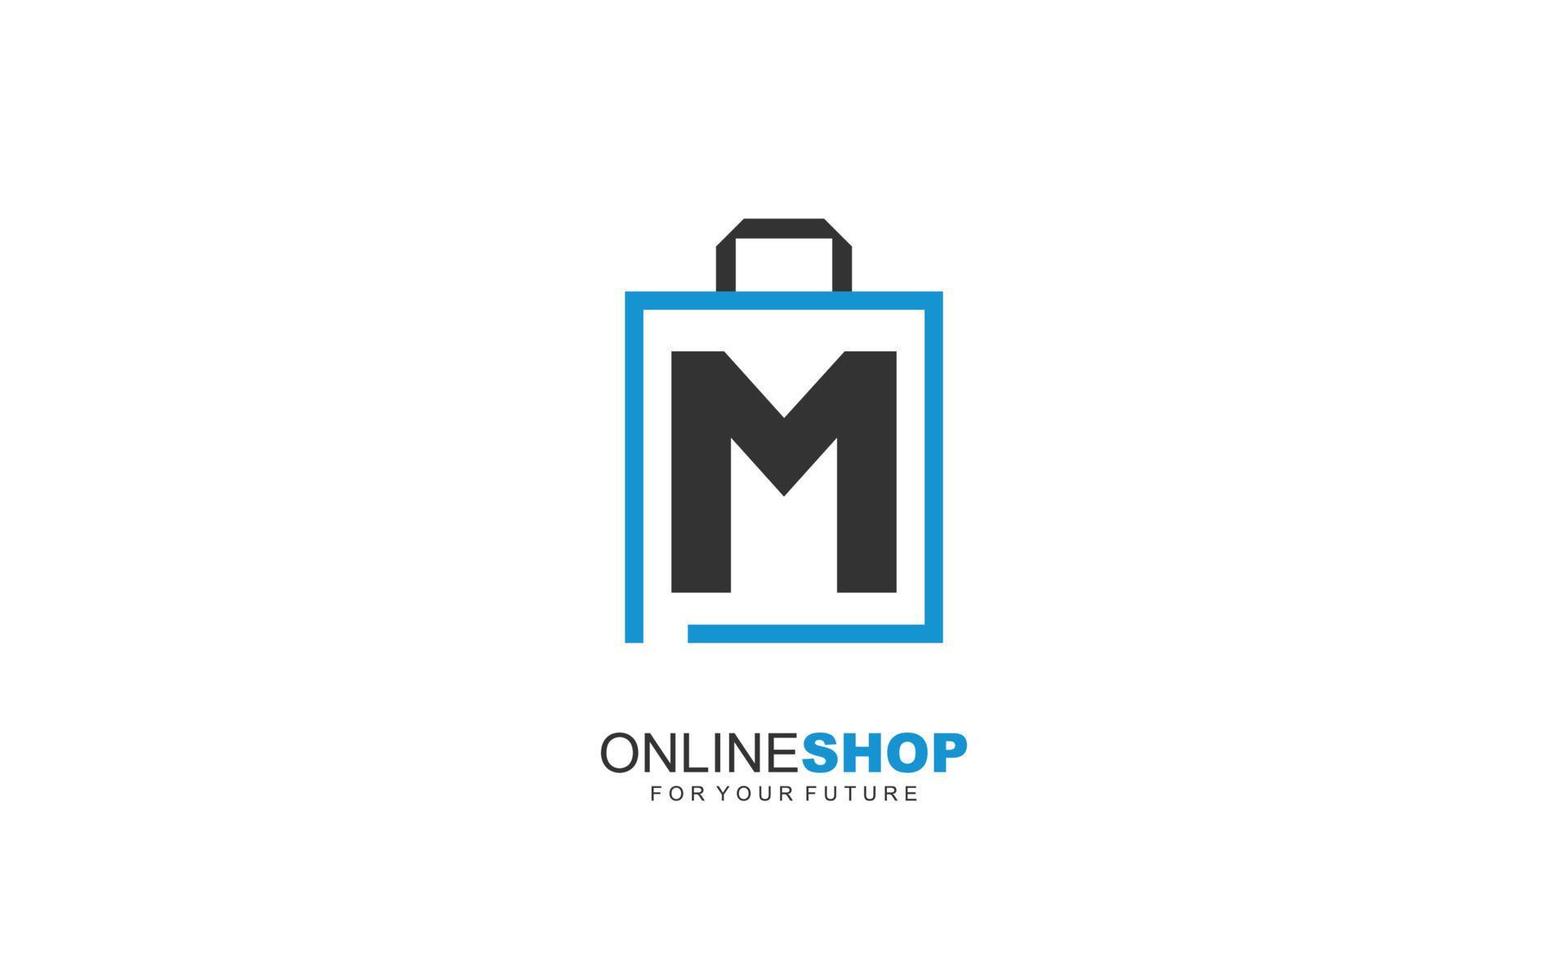 M logo ONLINESHOP for branding company. BAG template vector illustration for your brand.